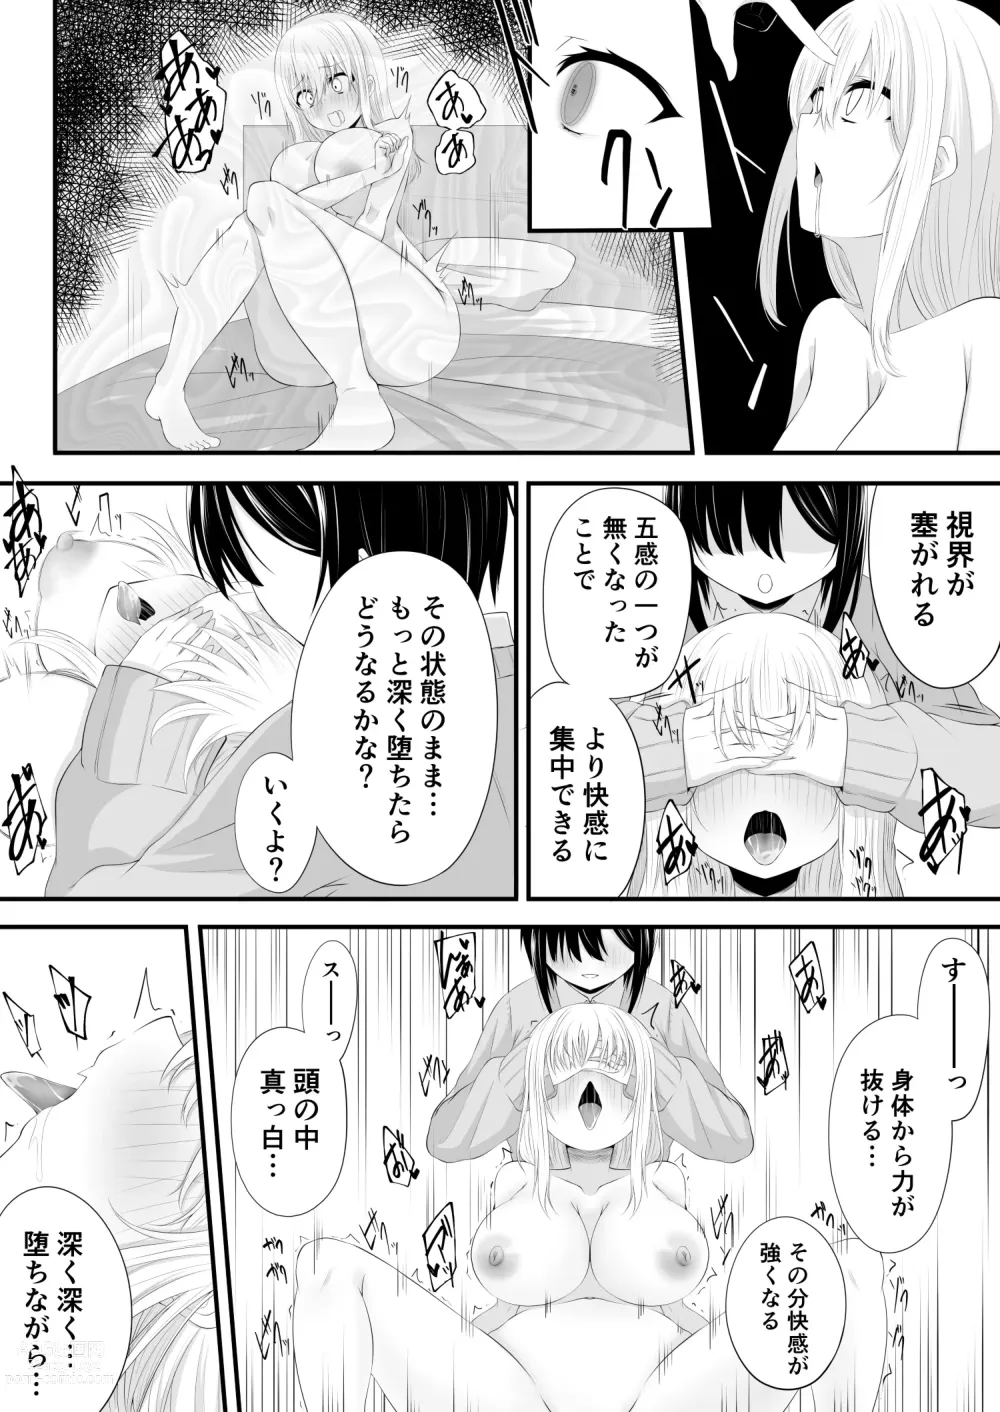 Page 12 of doujinshi Yuri Manga